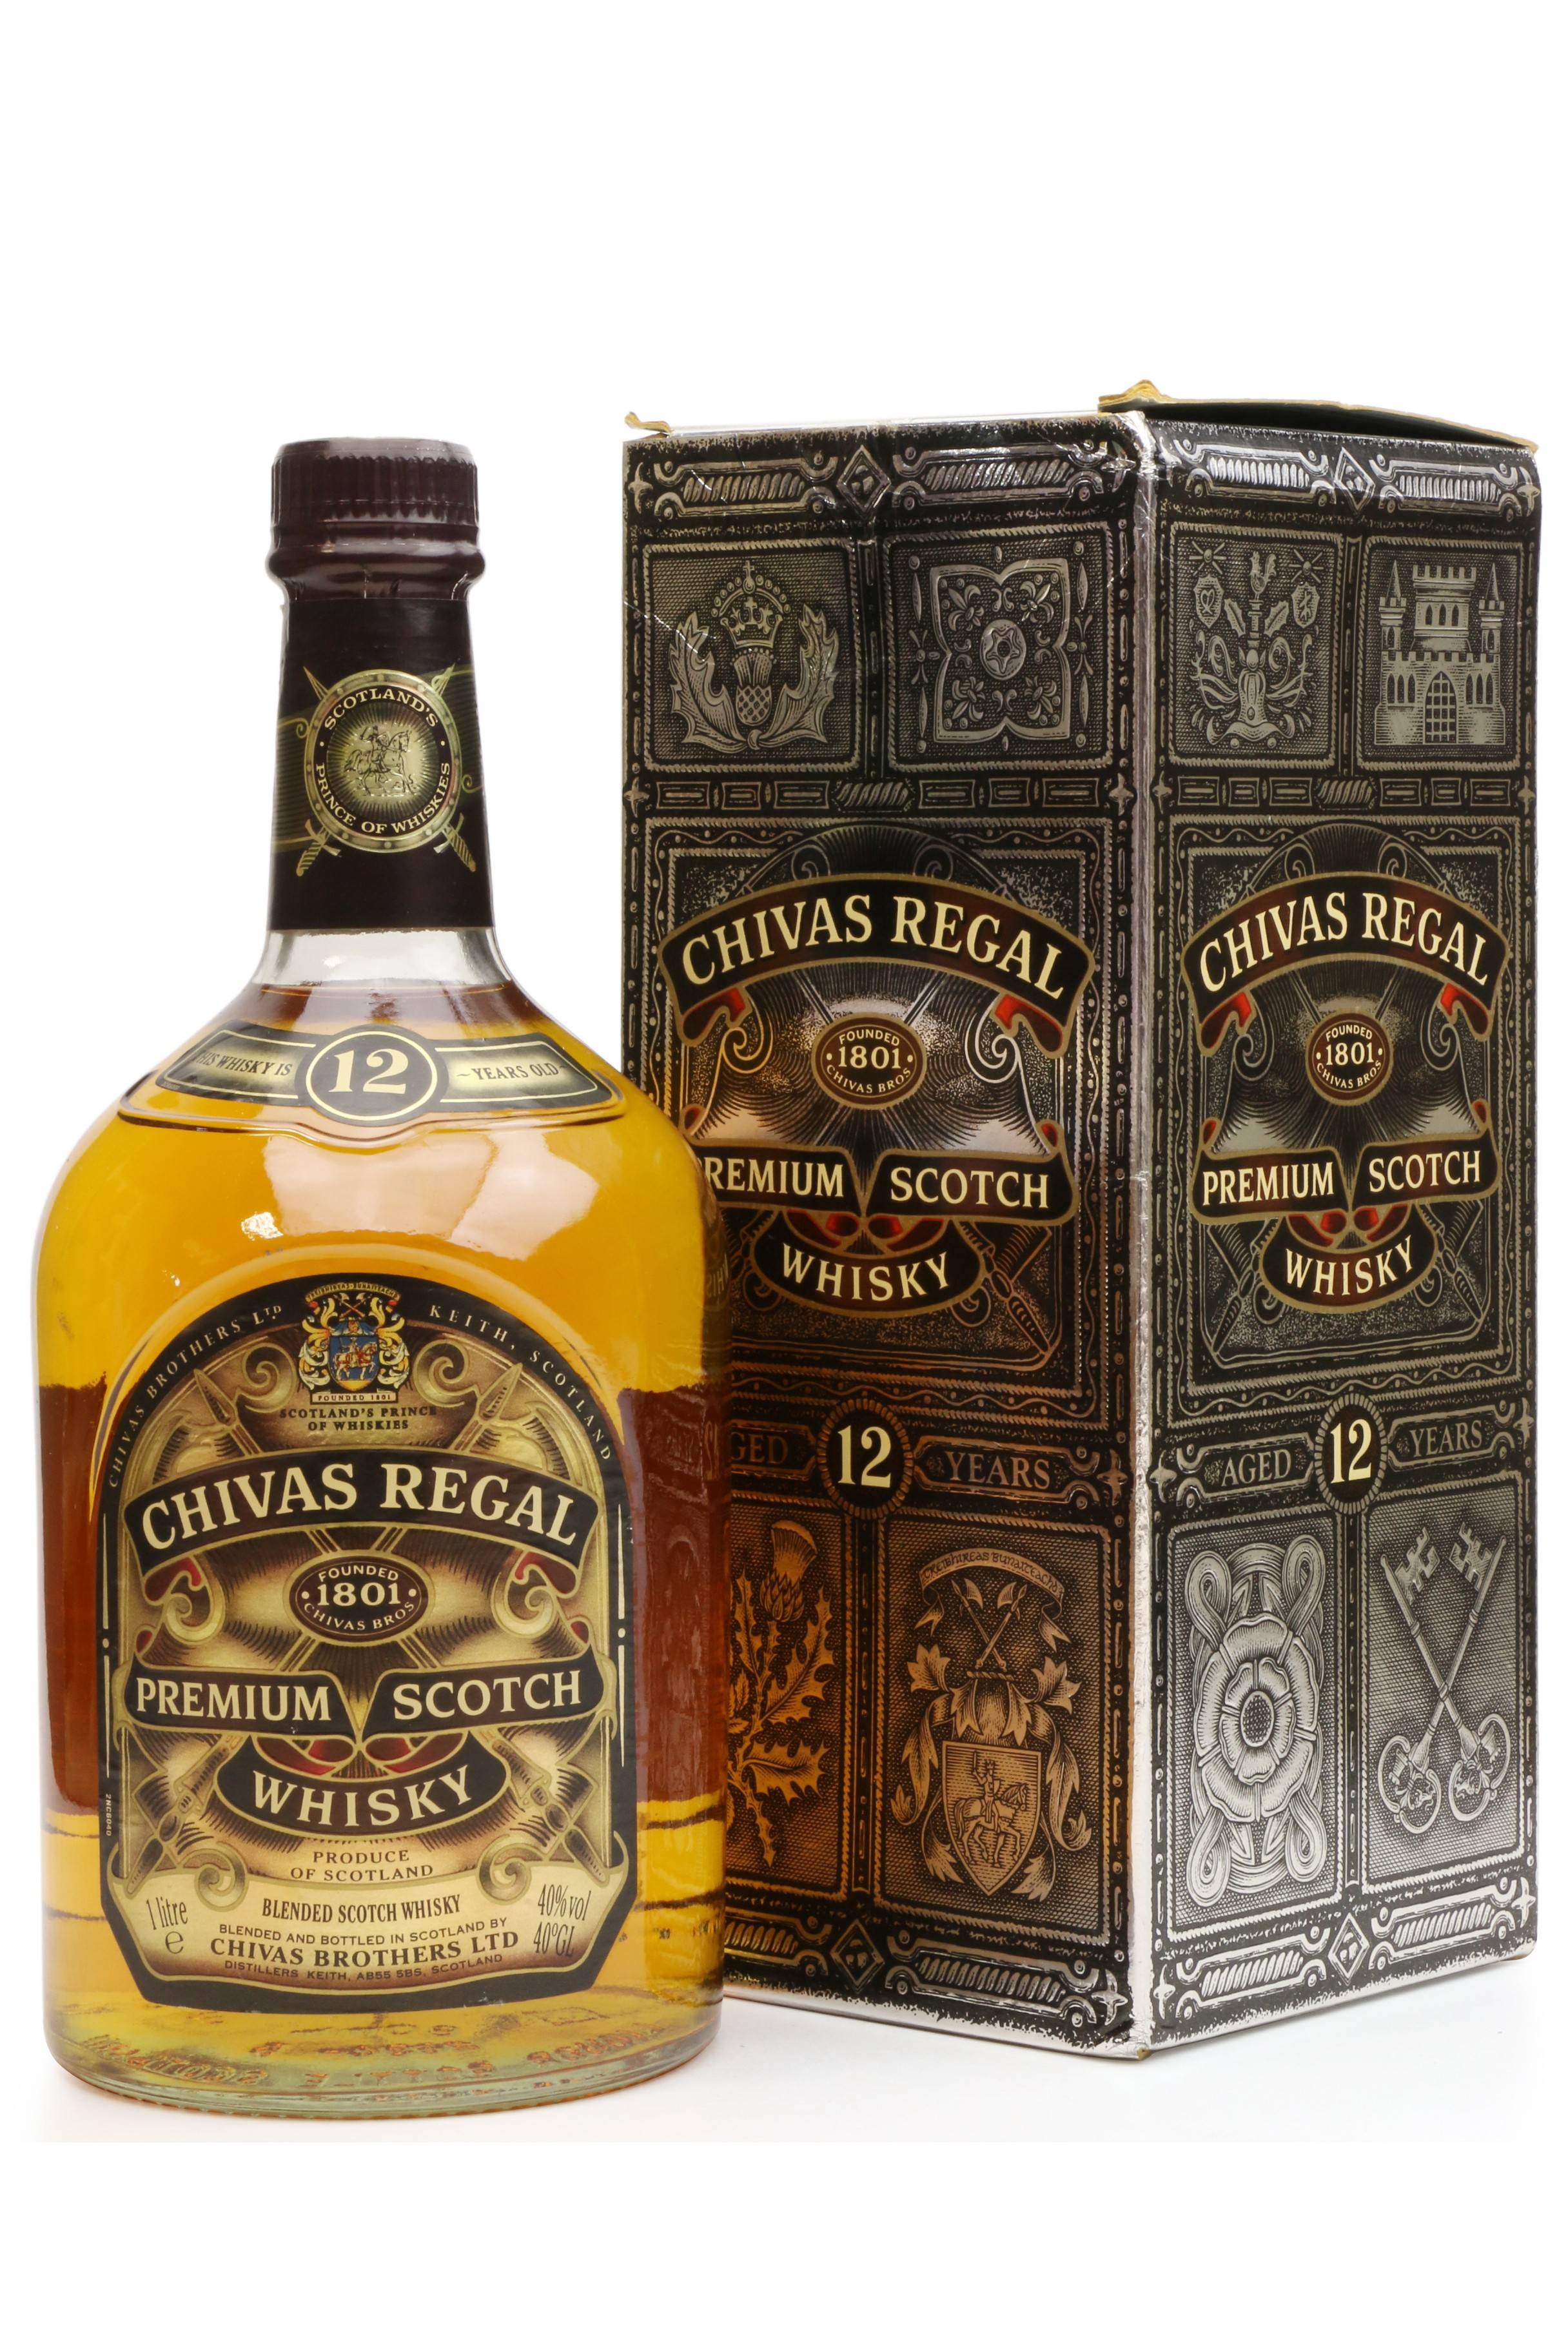 Chivas Regal 12 Year old Scotch Whisky 1L